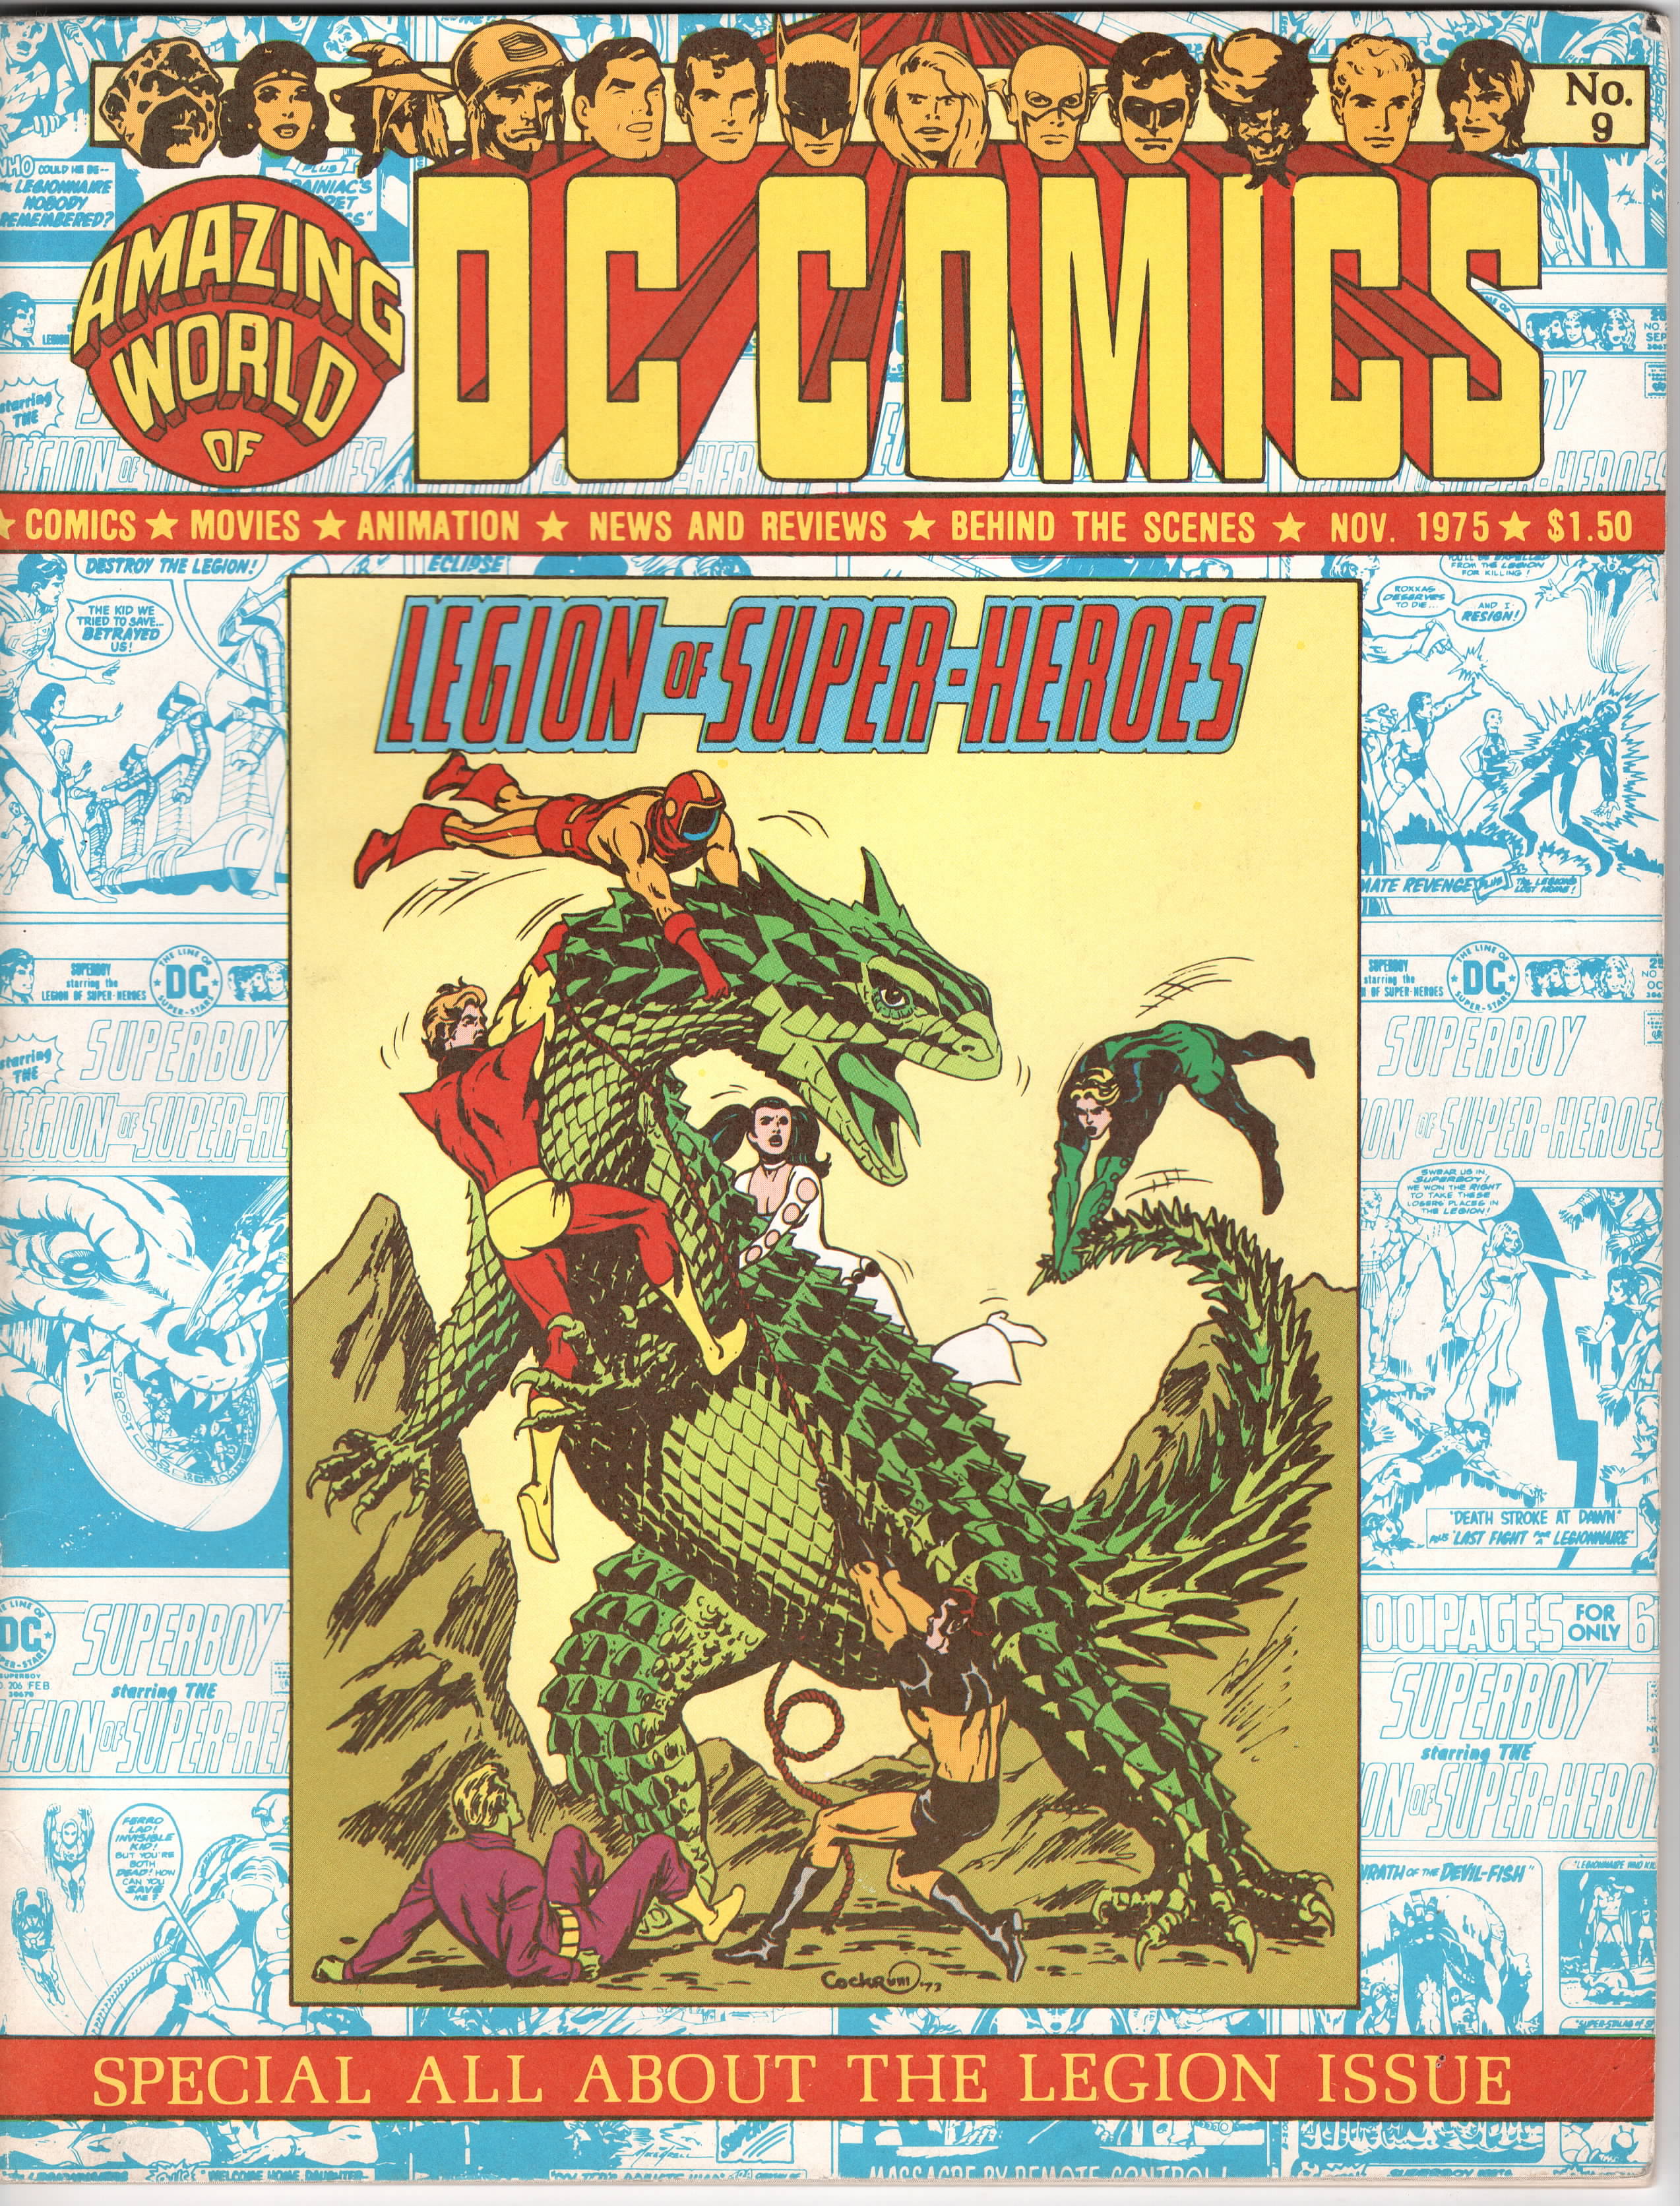 Amazing World of DC Comics #09